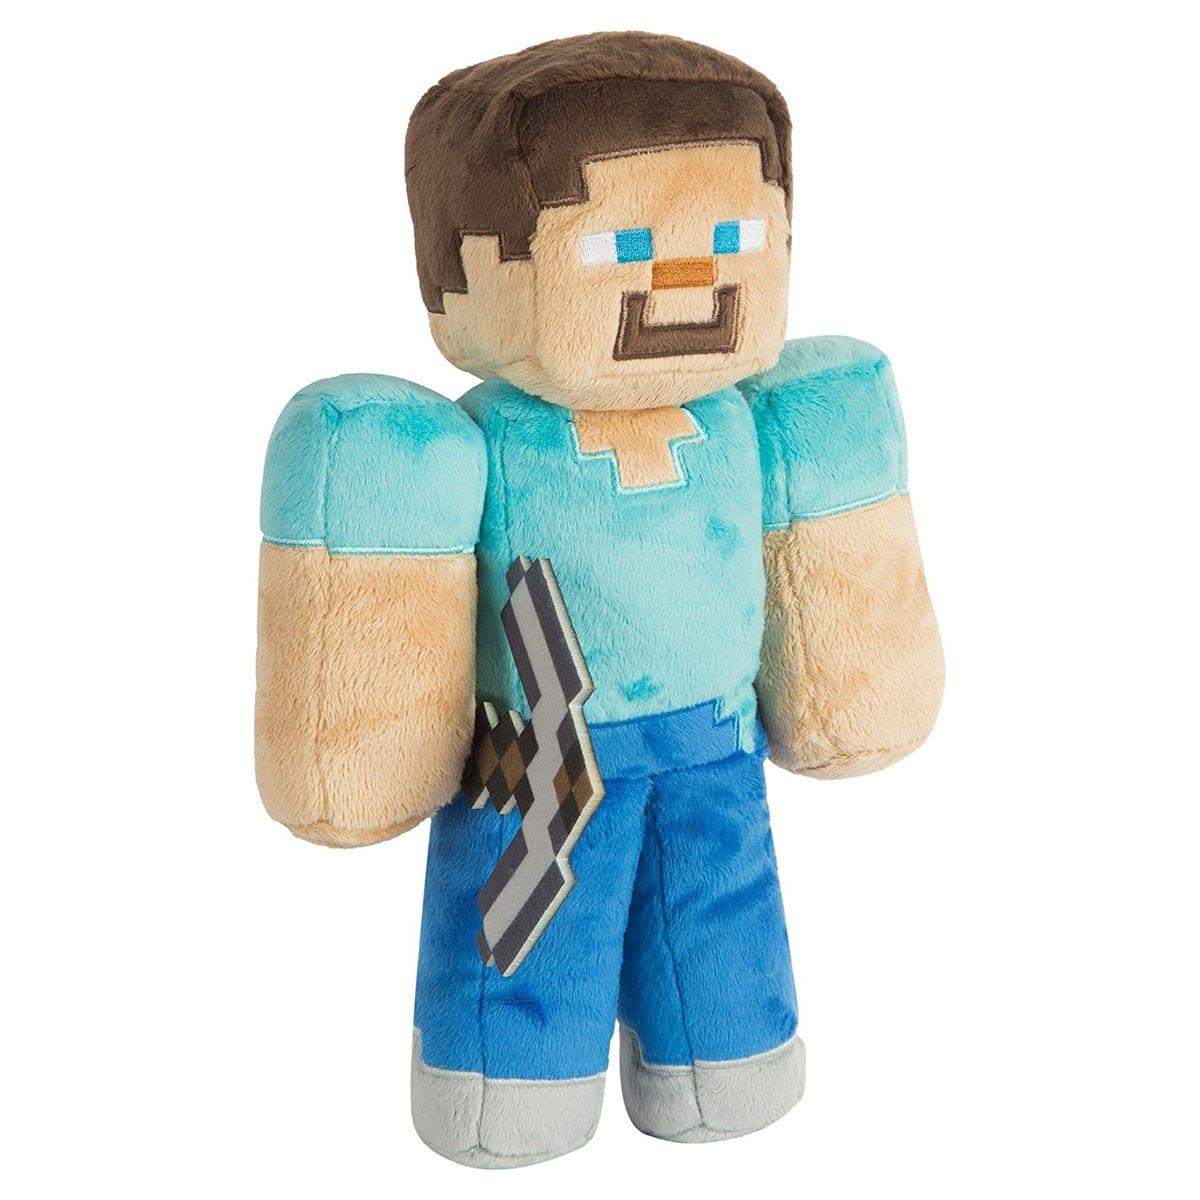 Minecraft 12" Steve Plush